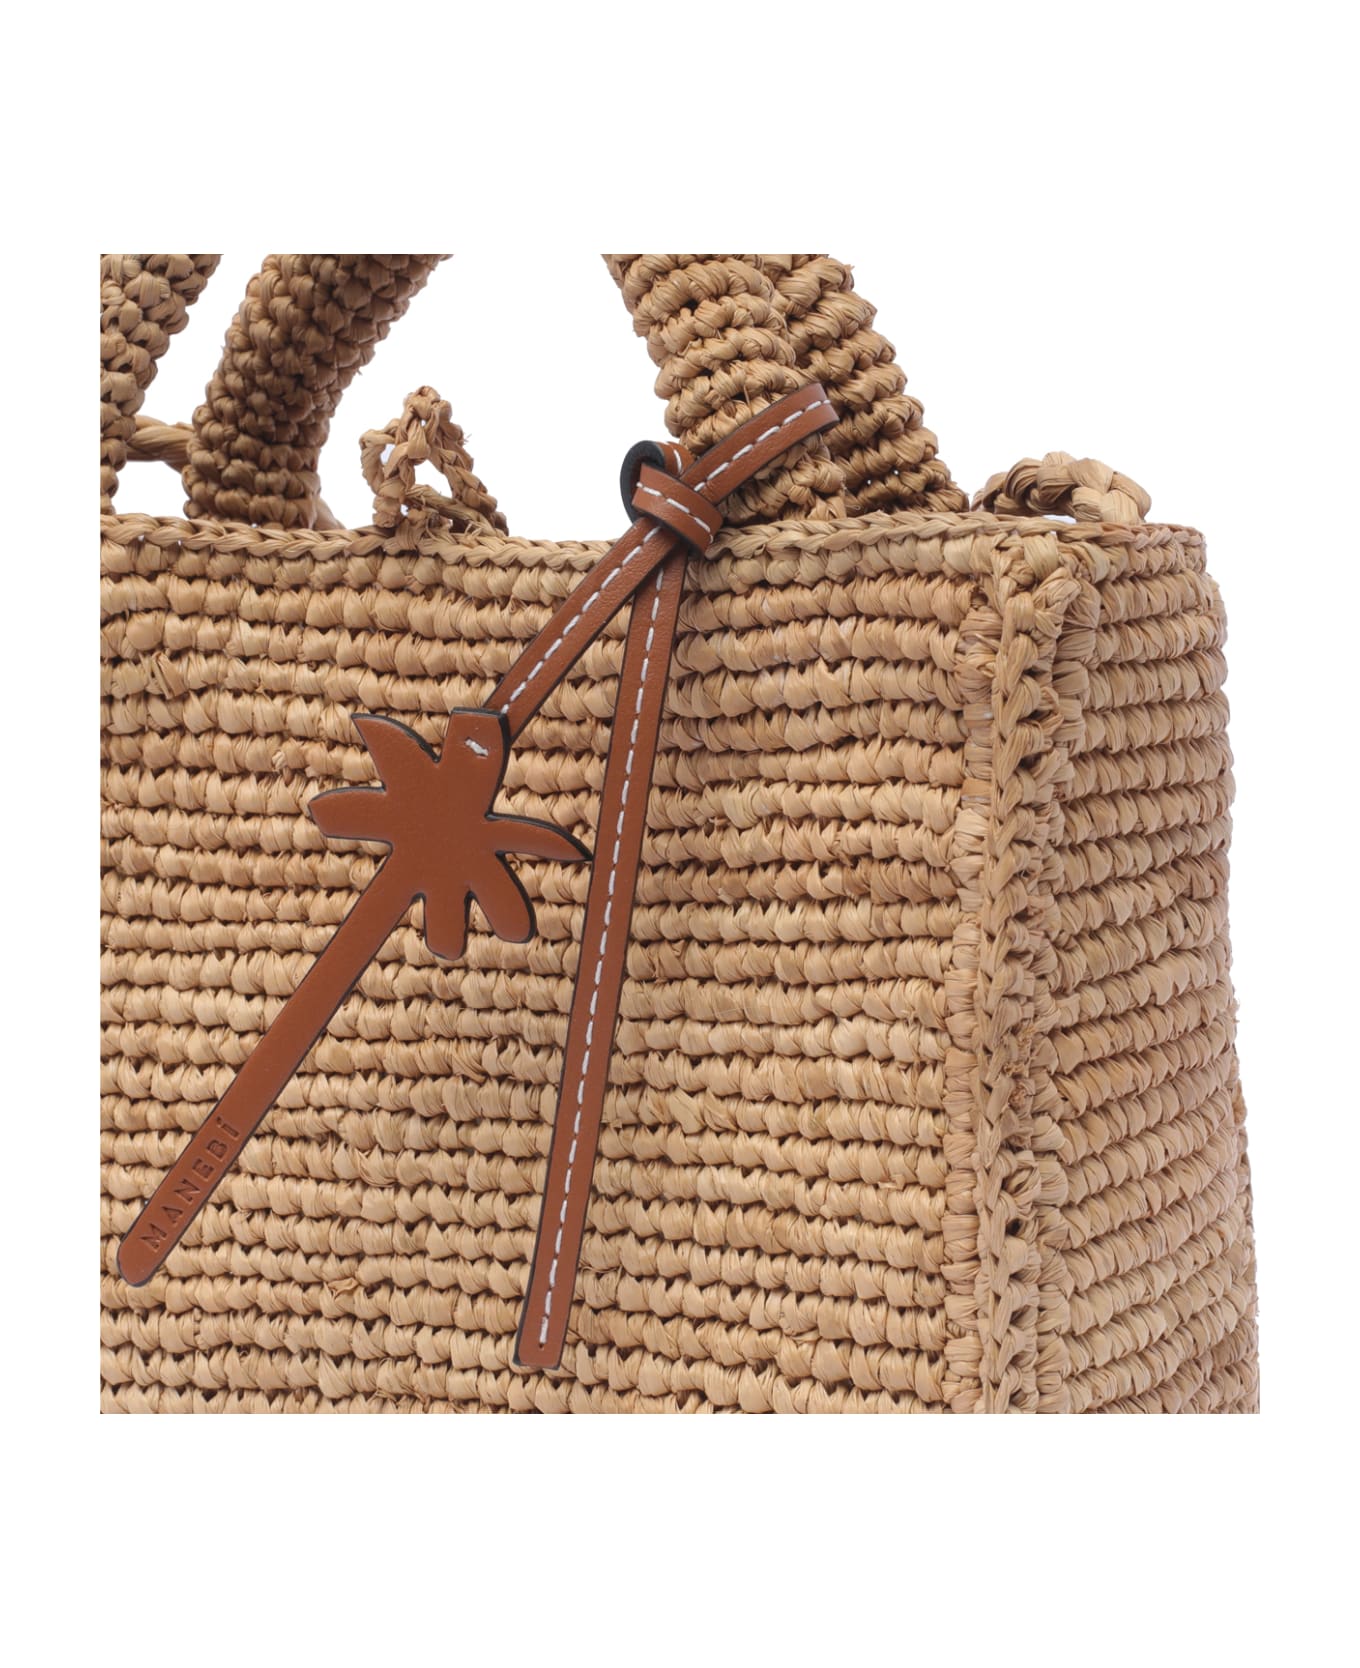 Manebi Mini Sunset Handbag - Brown トートバッグ